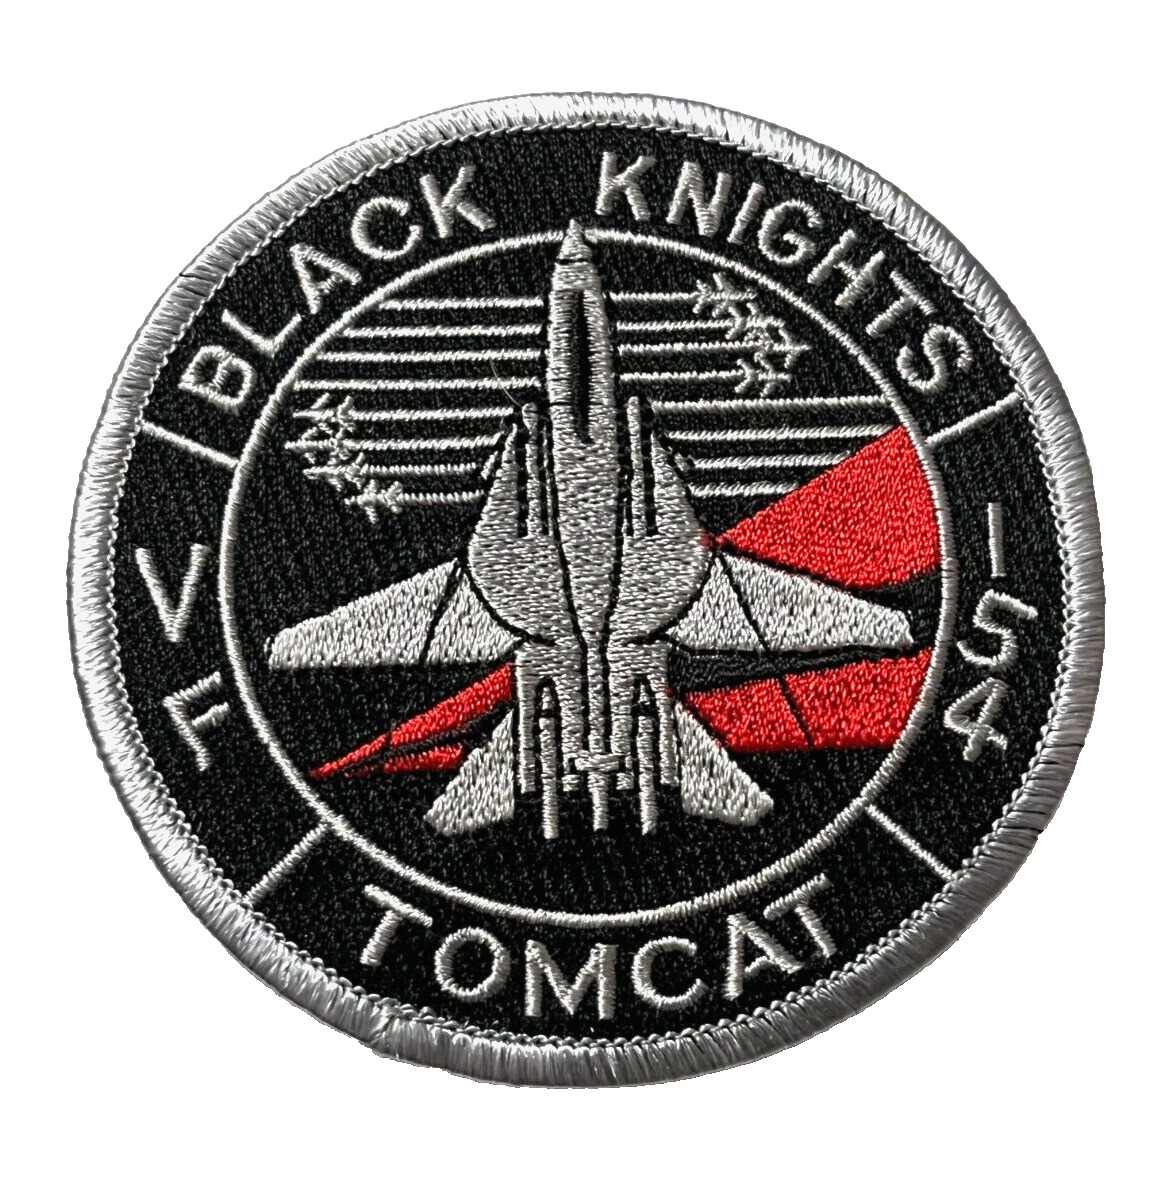 US NAVY VF-154 BLACK KNIGHTS TOMCAT F-14 NAVAL AVIATION PATCH (N-2)